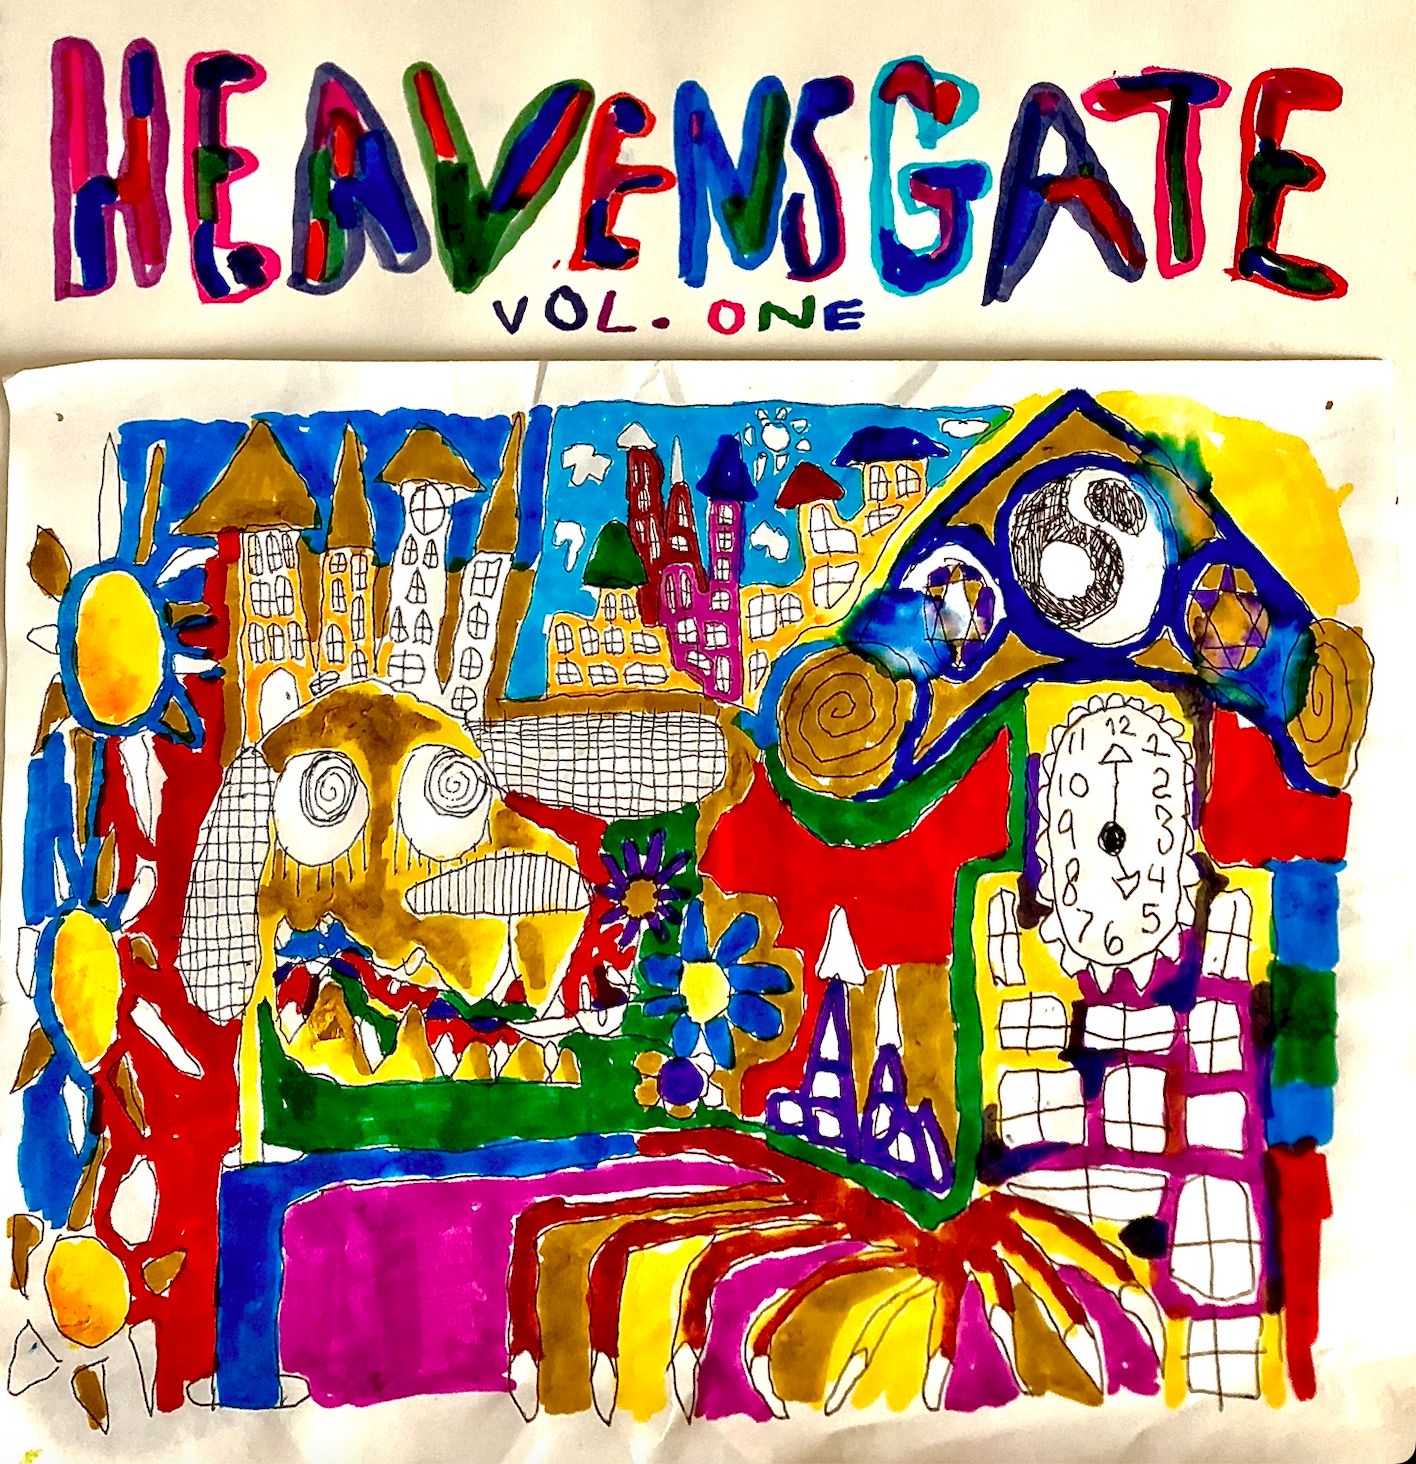 #HEAVENSGATE VOL. 1 by undefined album art